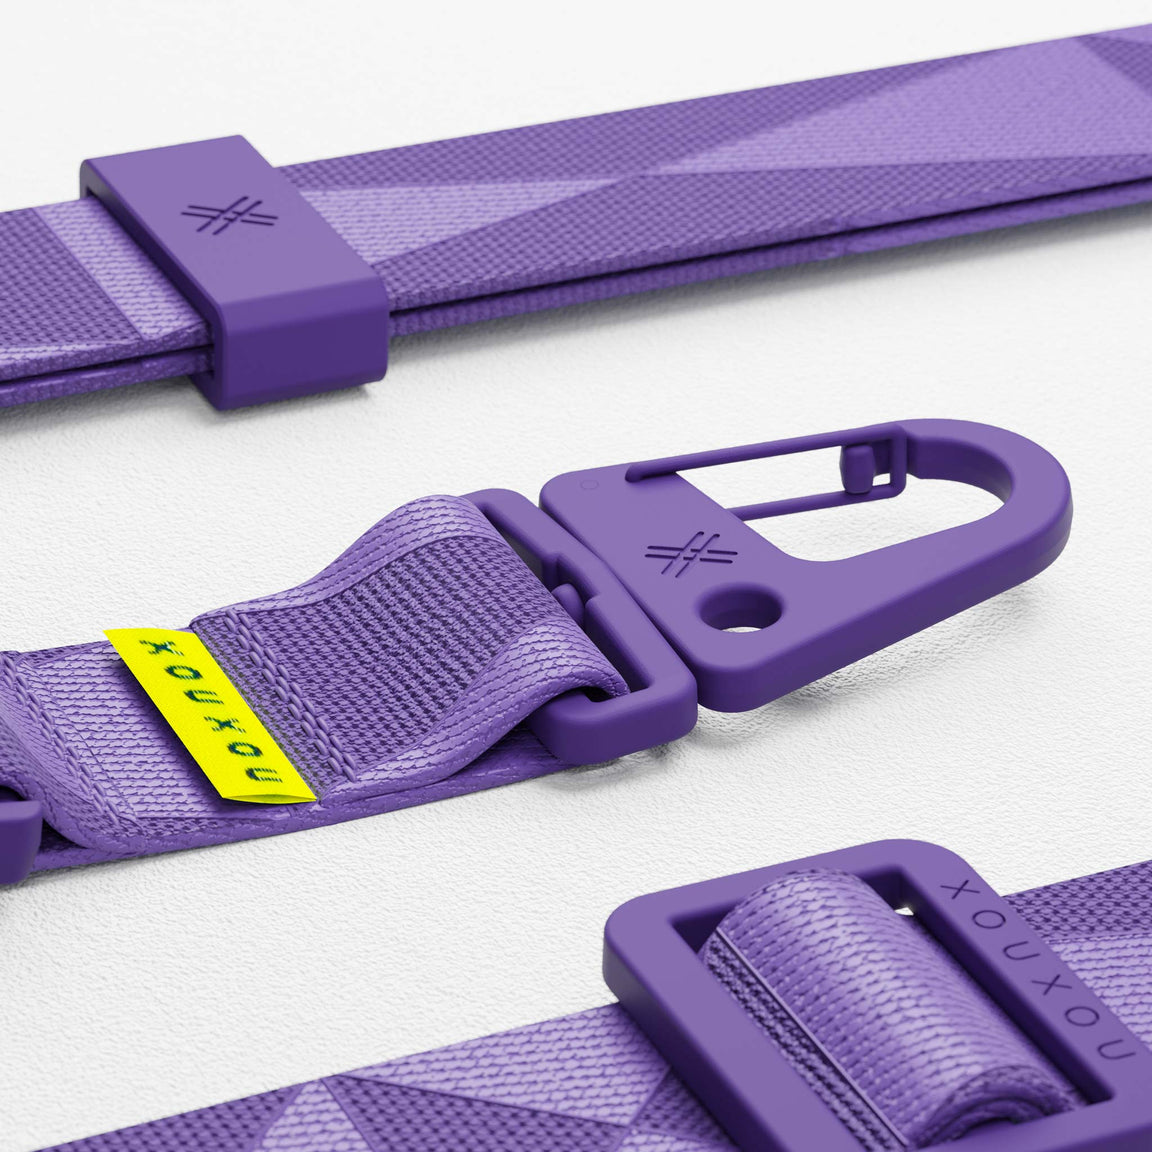 Modular wide Phone Strap / Lanyard in Purple | XOUXOU